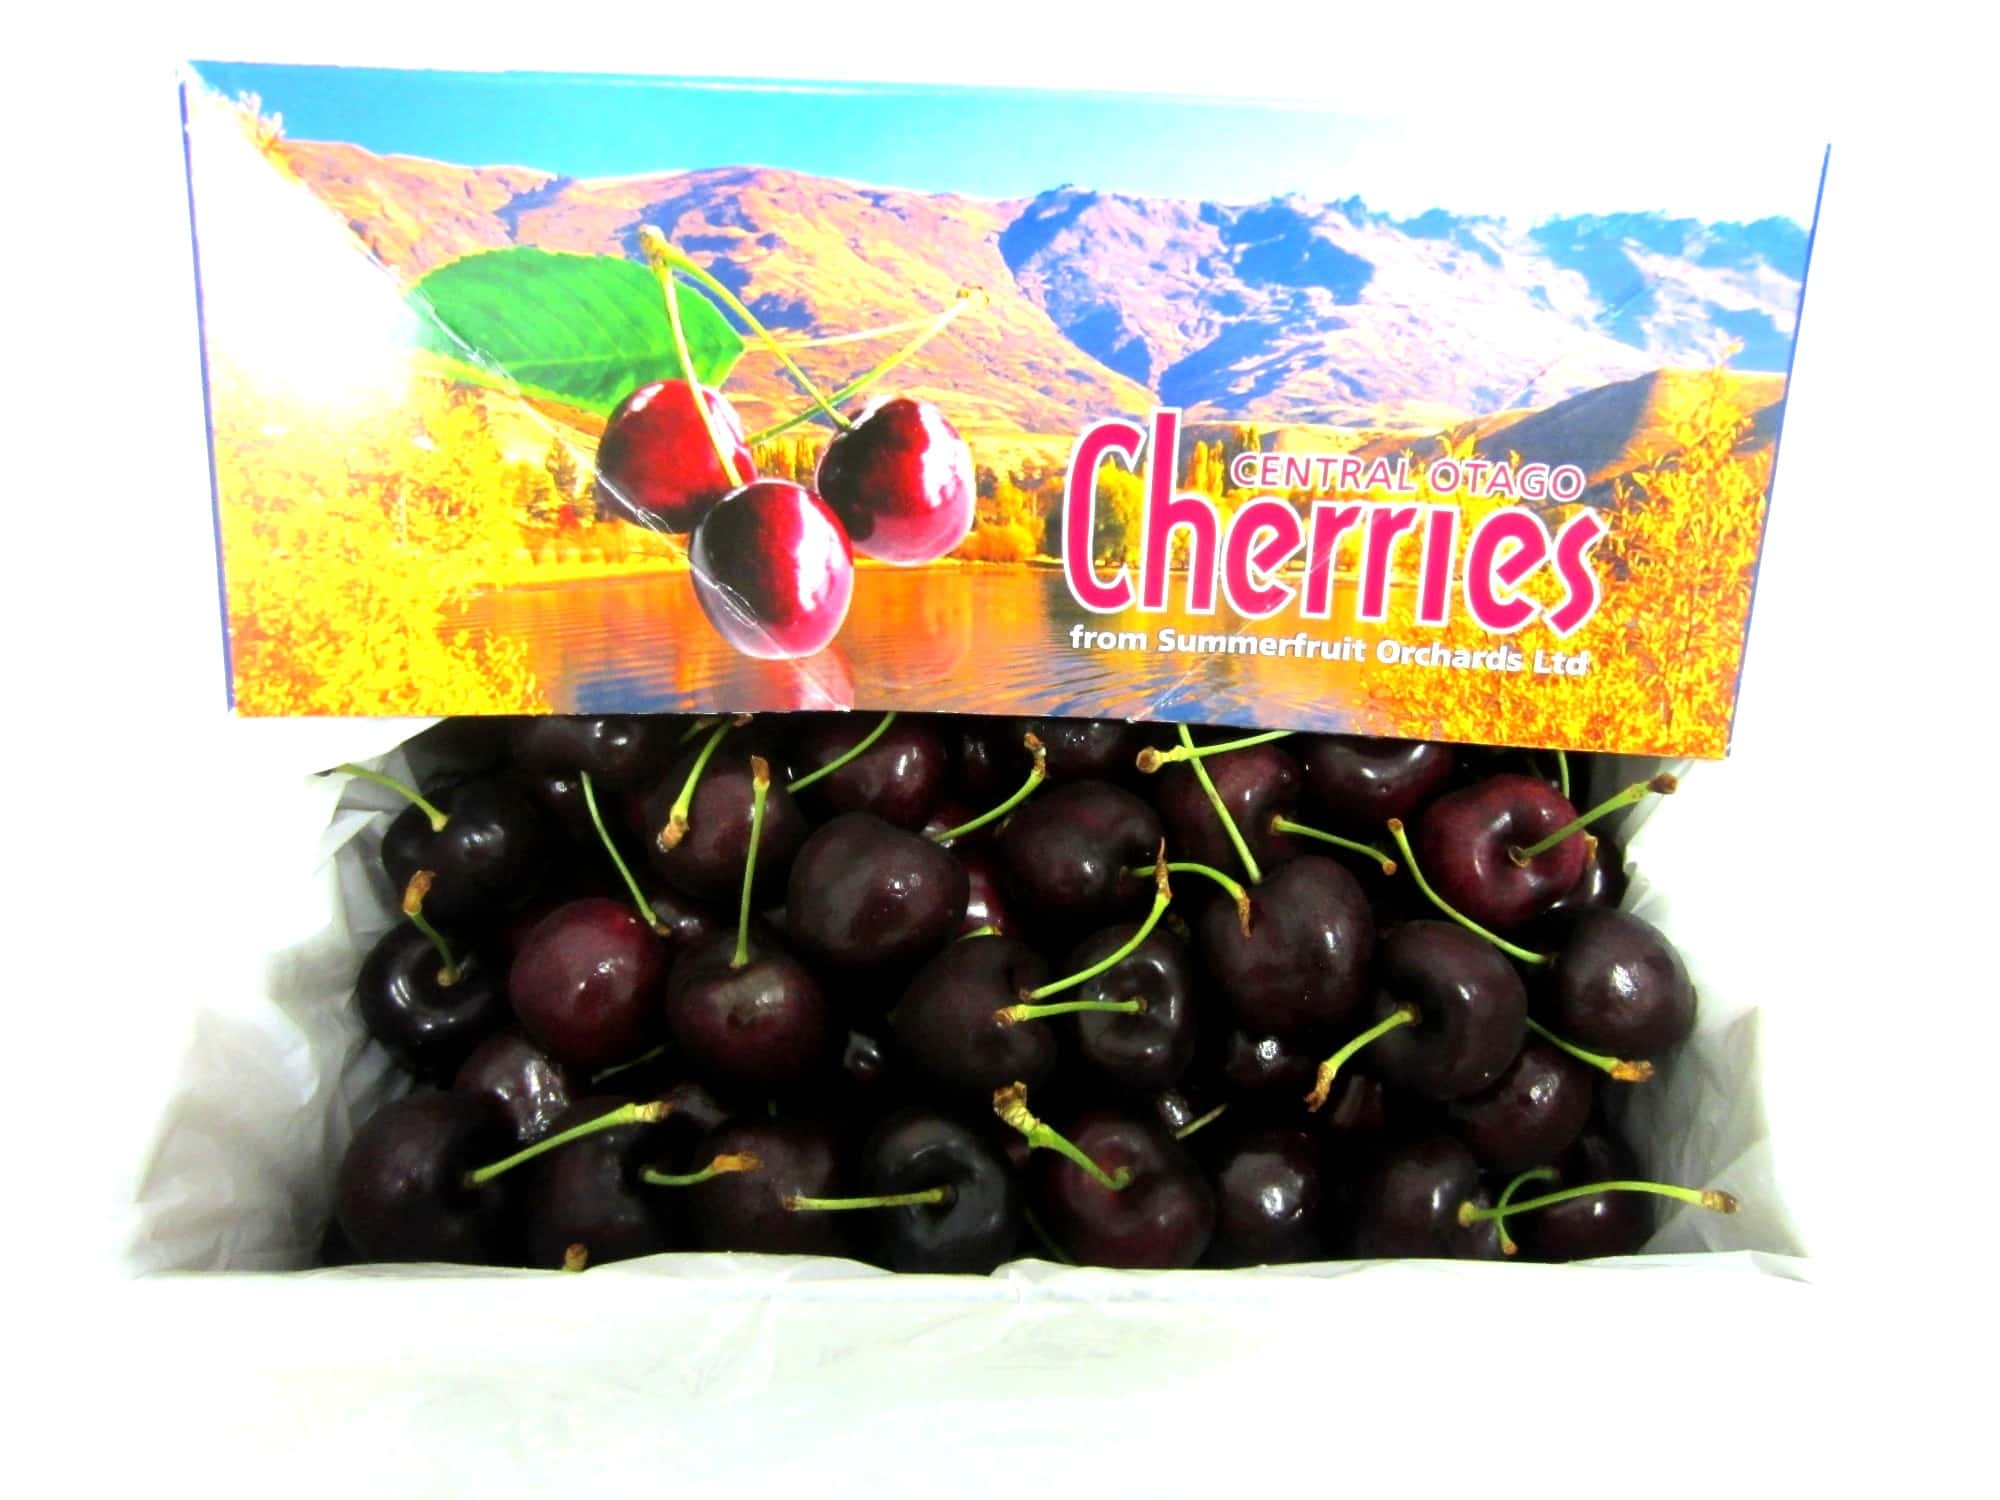 Cherry-loai-1-Newzealand-vinfruits.com